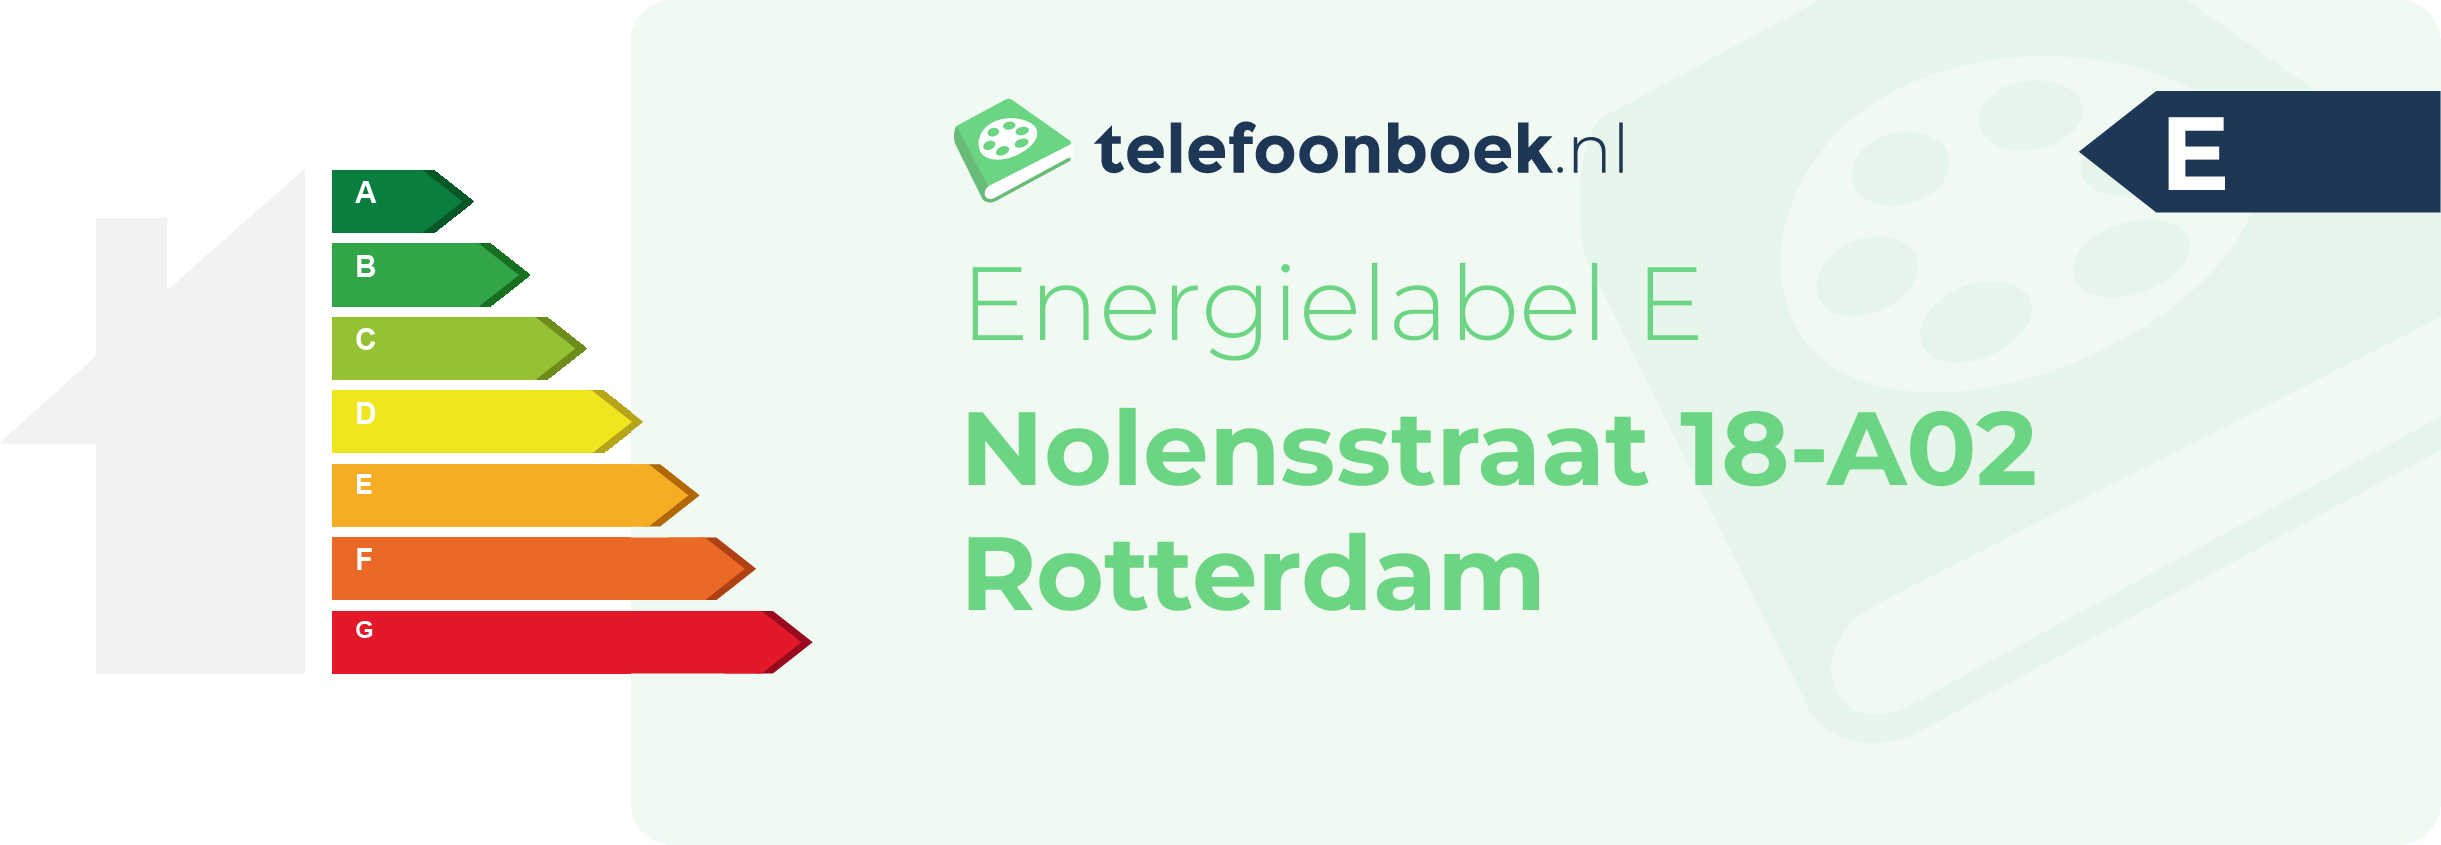 Energielabel Nolensstraat 18-A02 Rotterdam